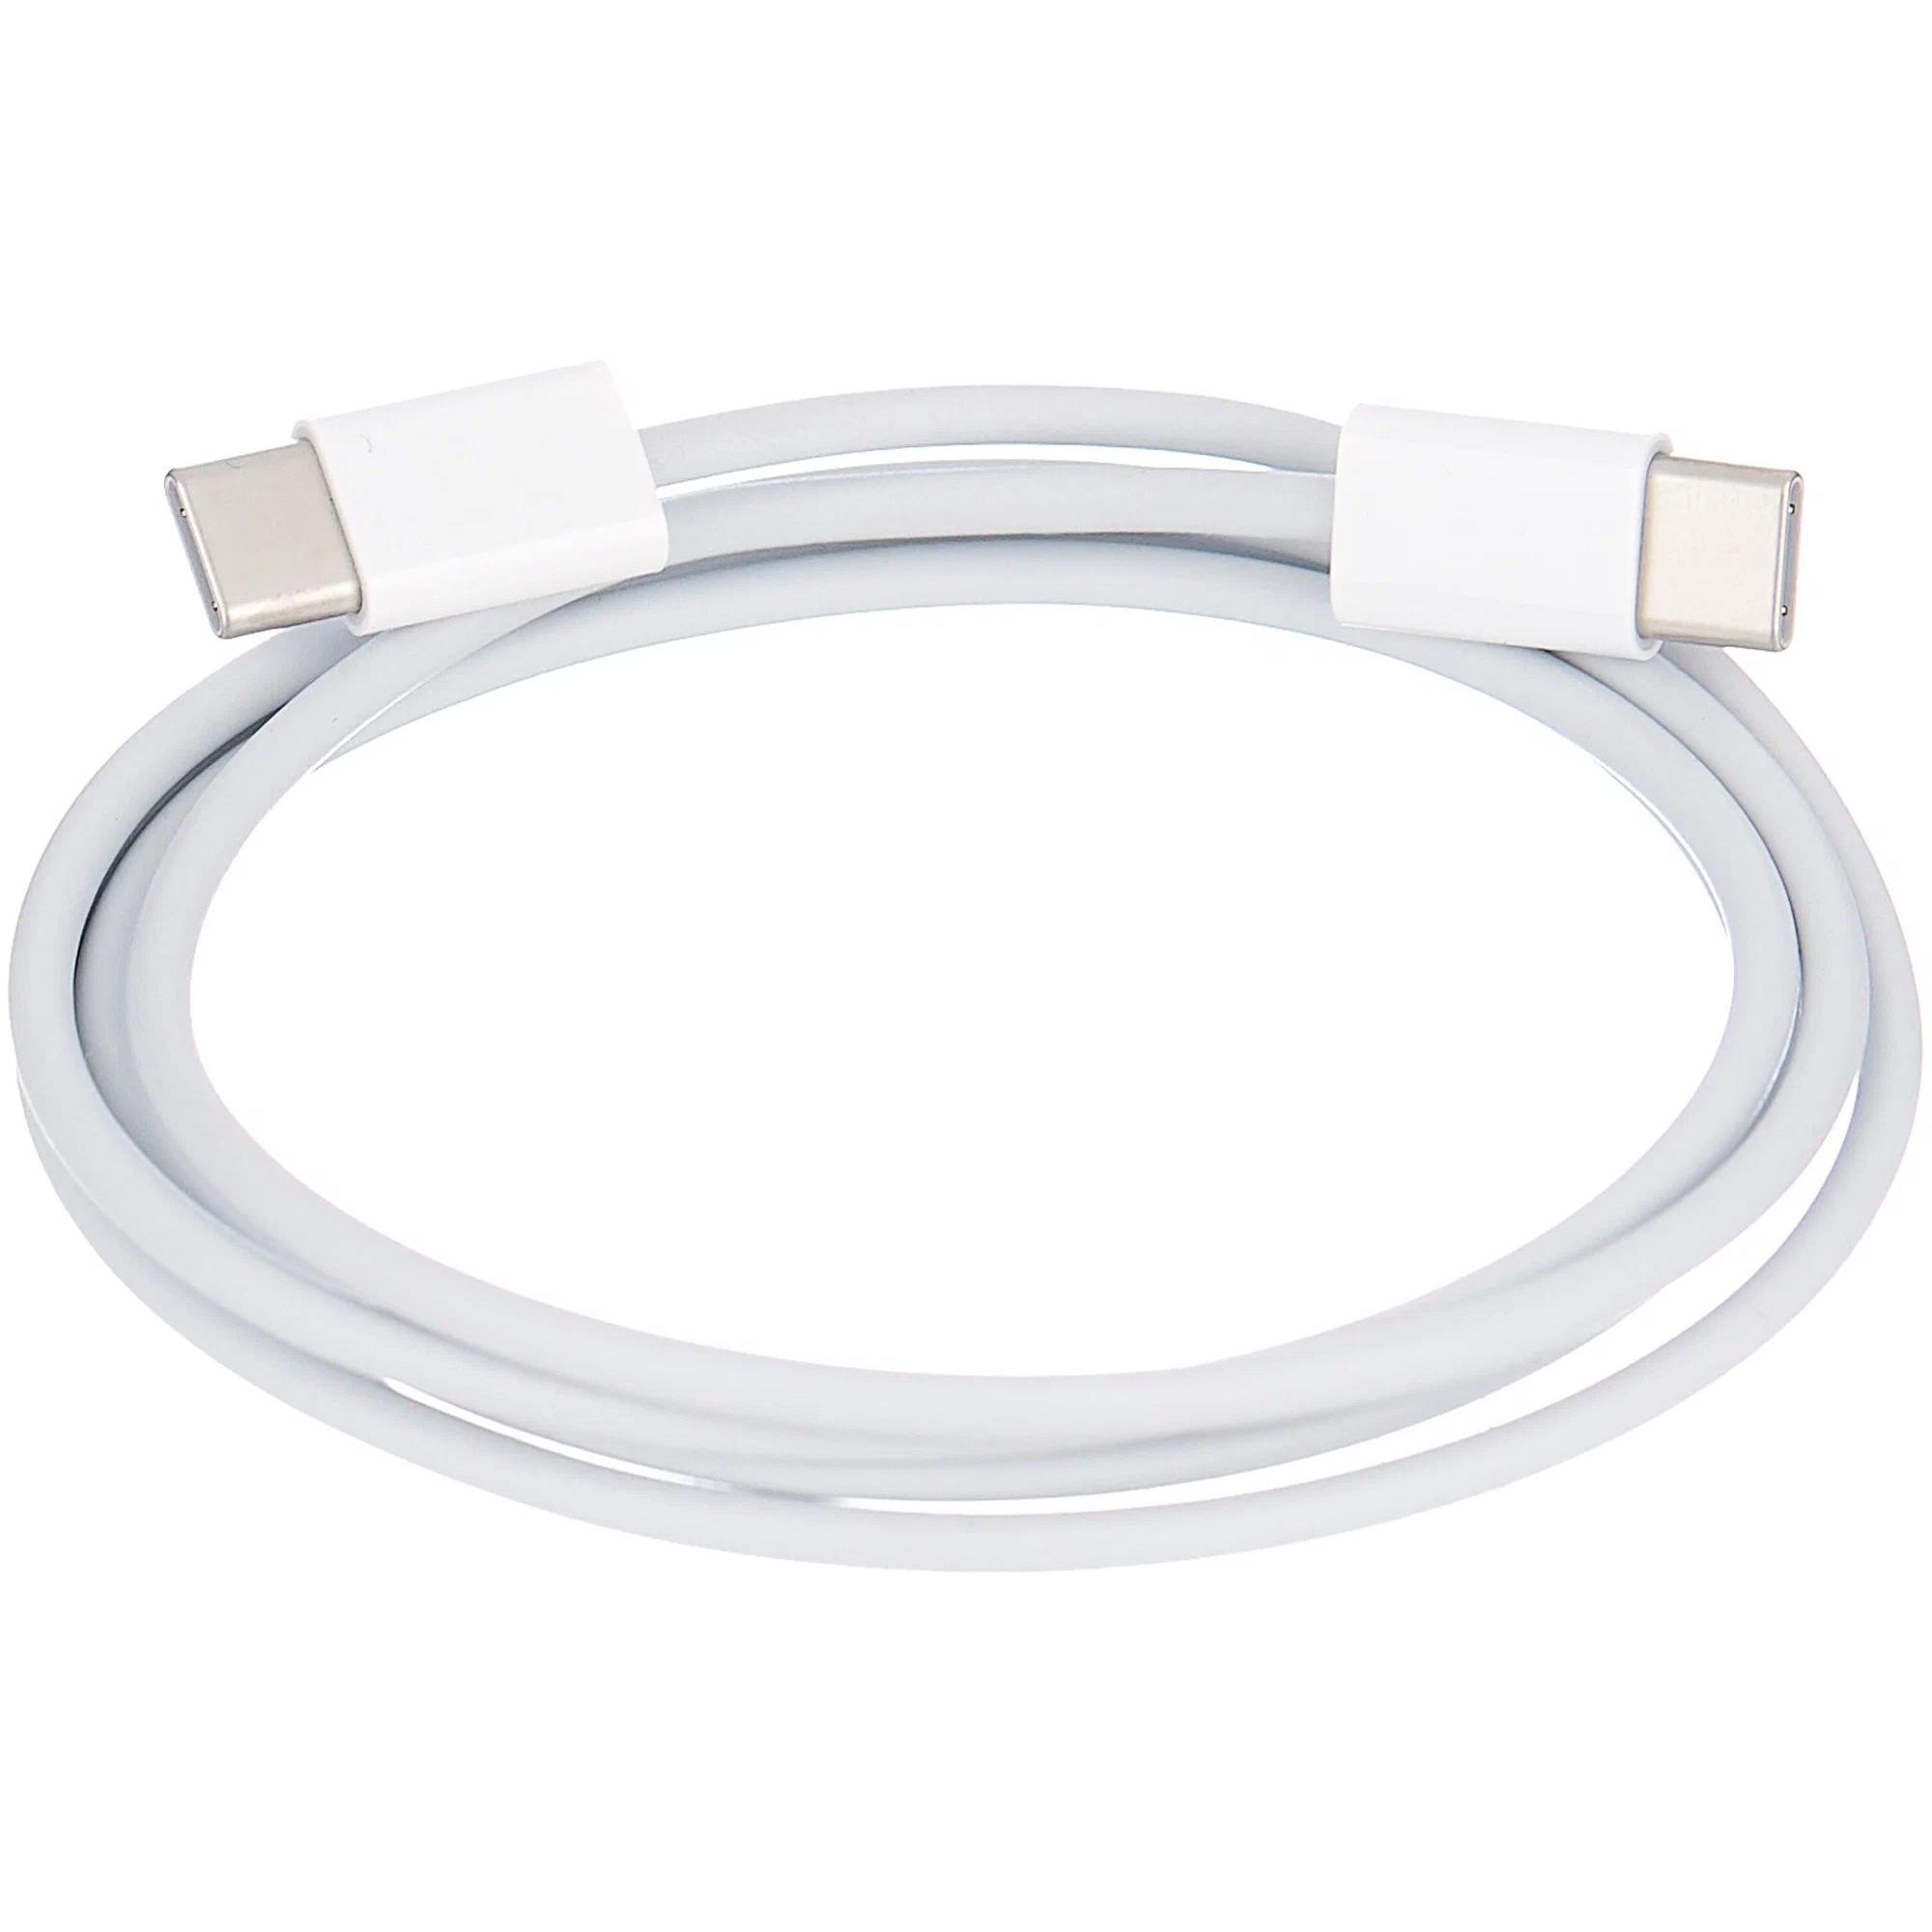 Кабель Apple USB-C Charge Cable (1m) MM093ZM/A кабель зарядный usb c to magsafe 3 cable 2 m zeepdeep energy silver